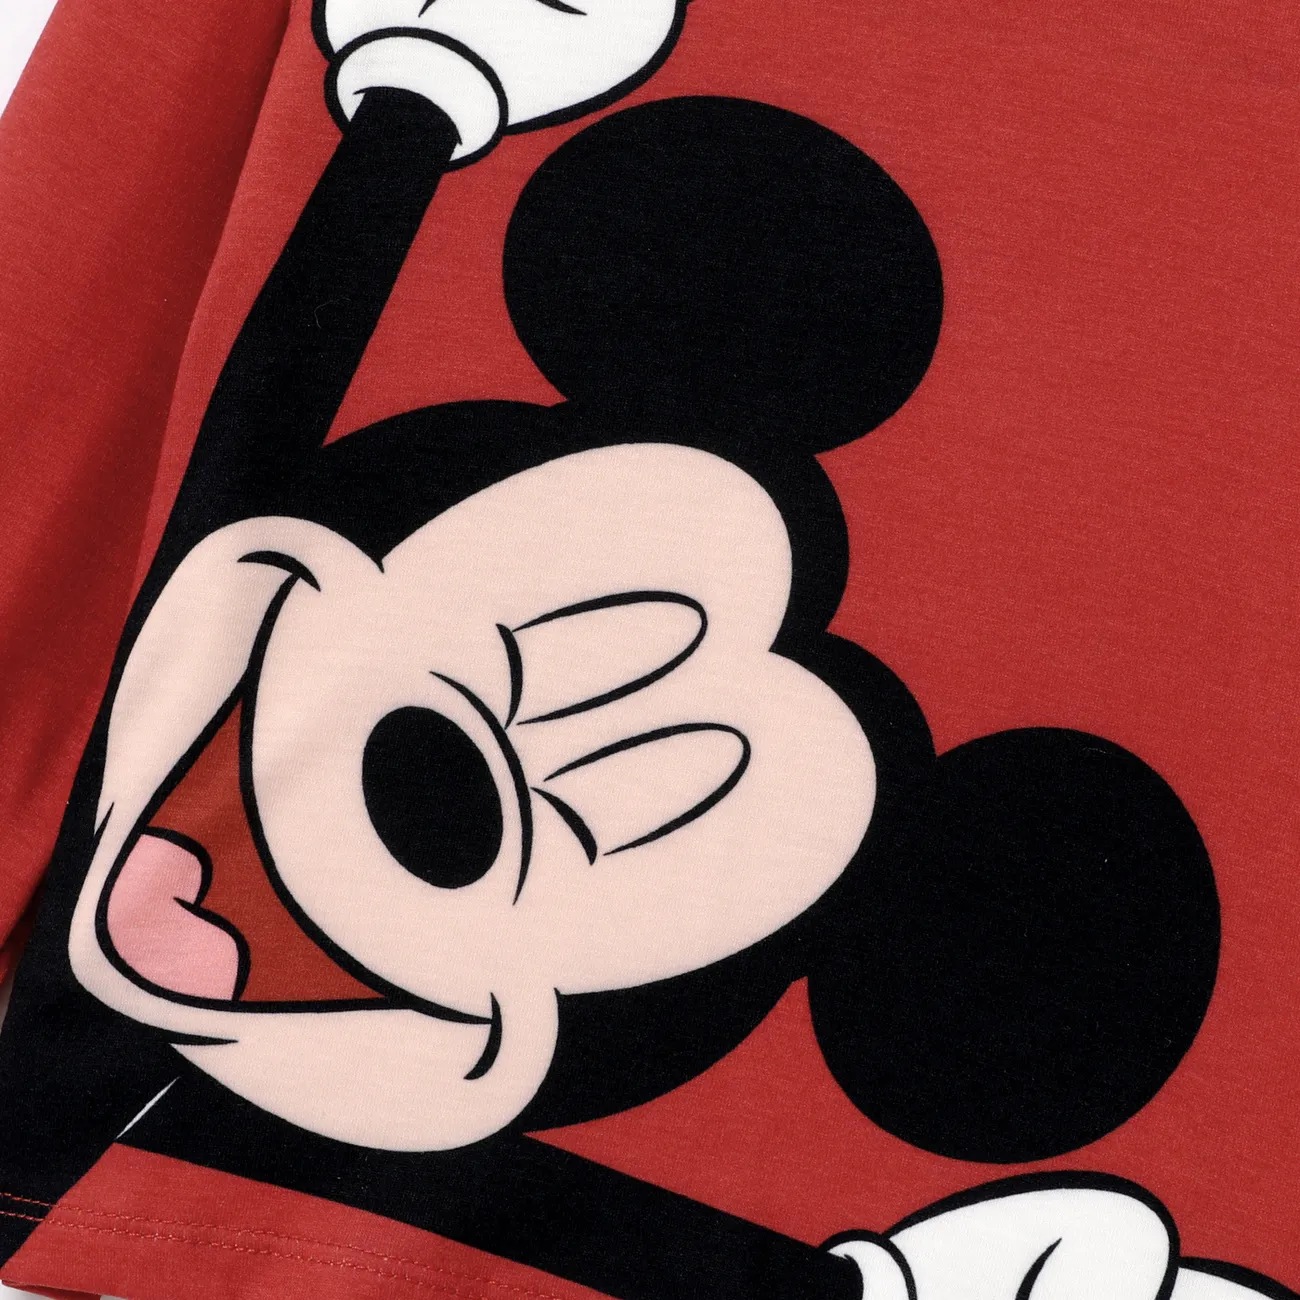 Disney Mickey and Friends Unisex Infantil Camiseta Rojo big image 1